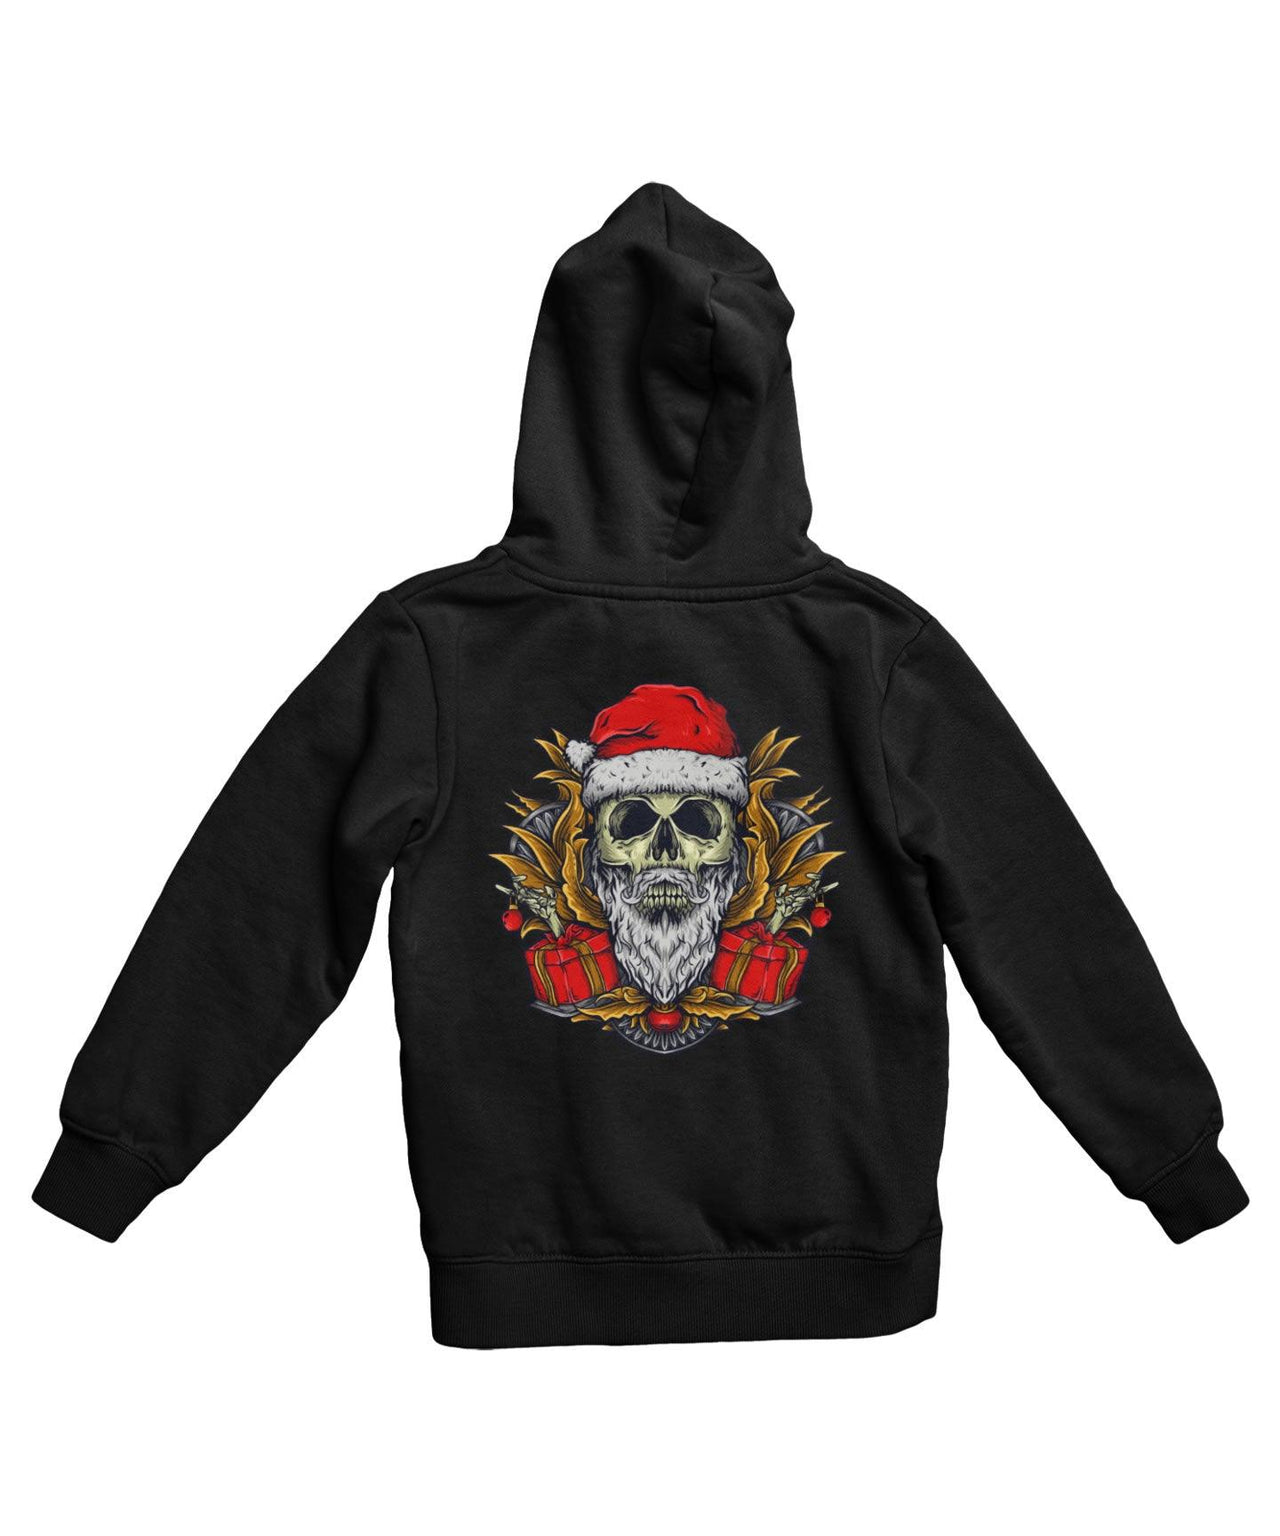 Skull Santa Back Printed Christmas Hoodie For Men and Women 8Ball